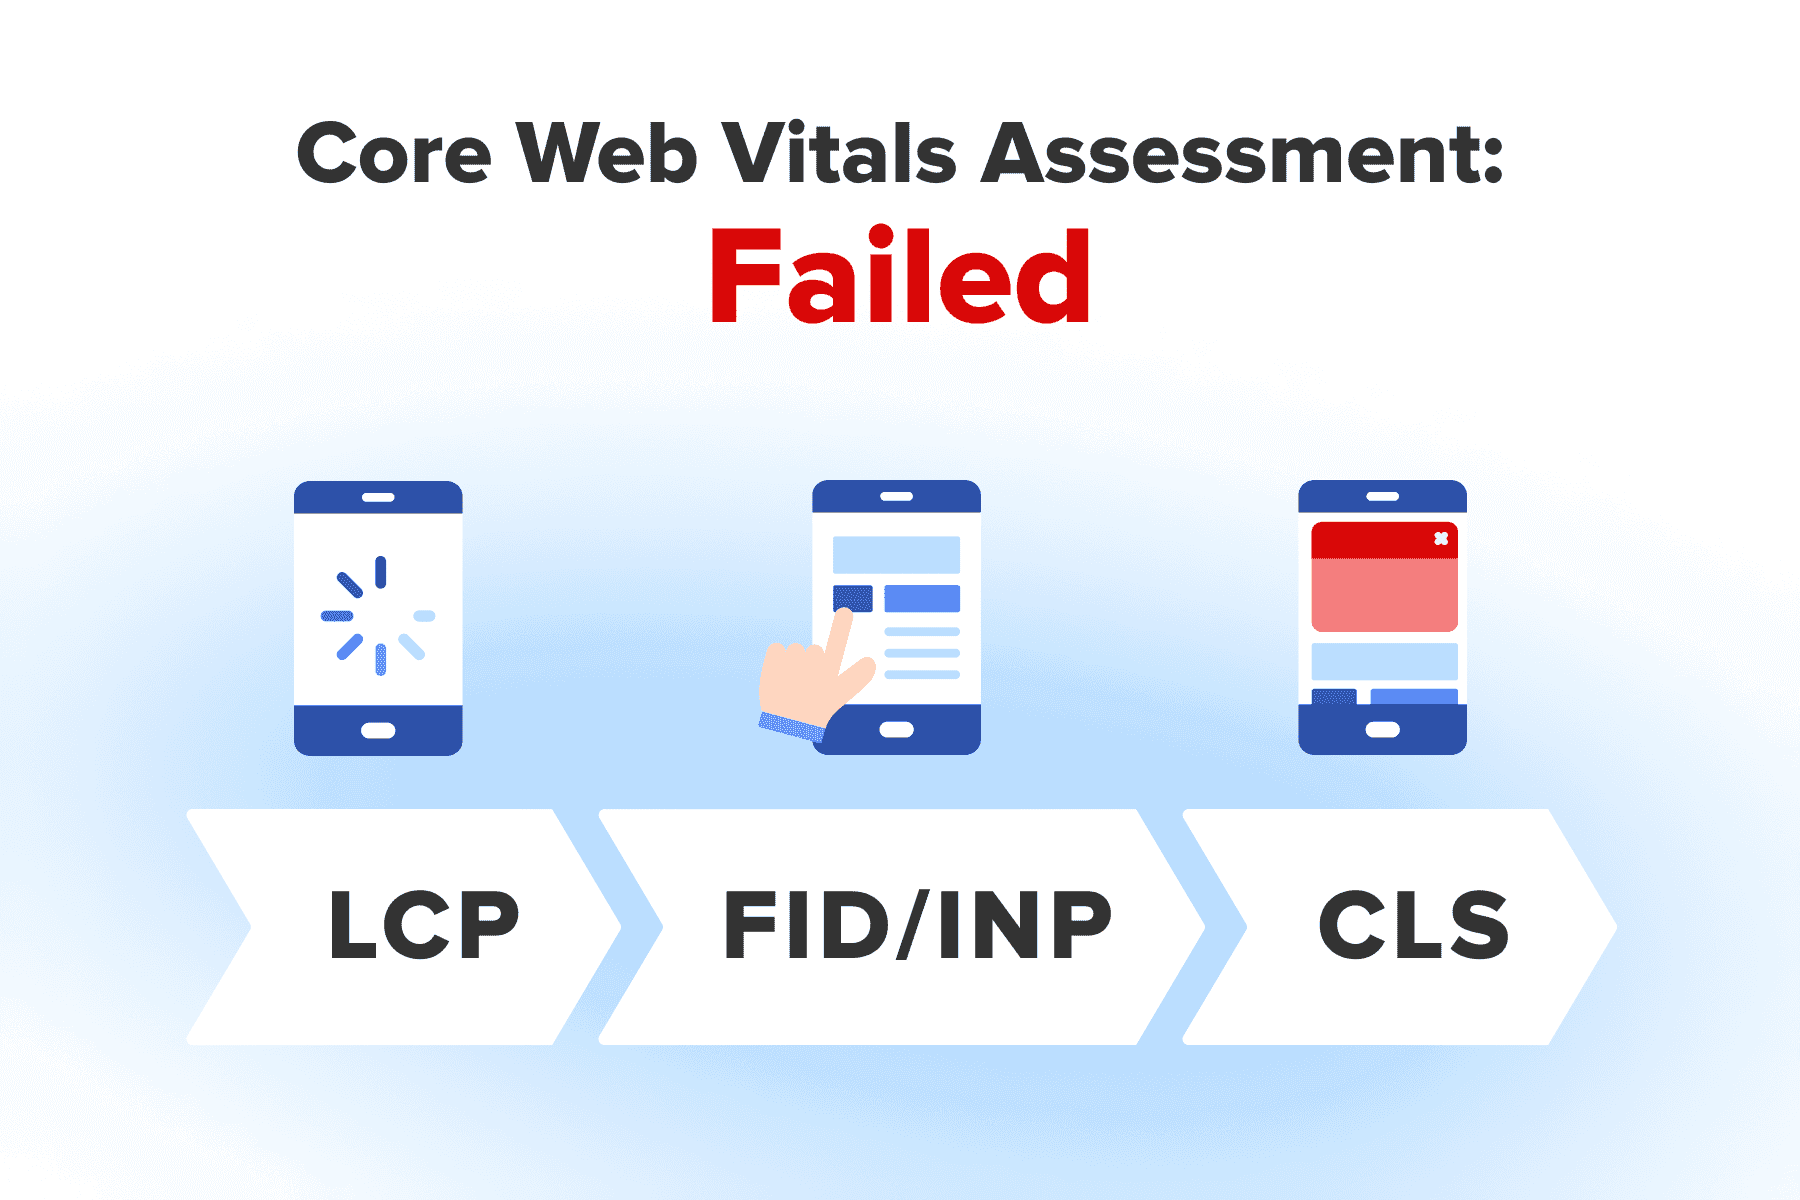 Core web vitals assessments failed